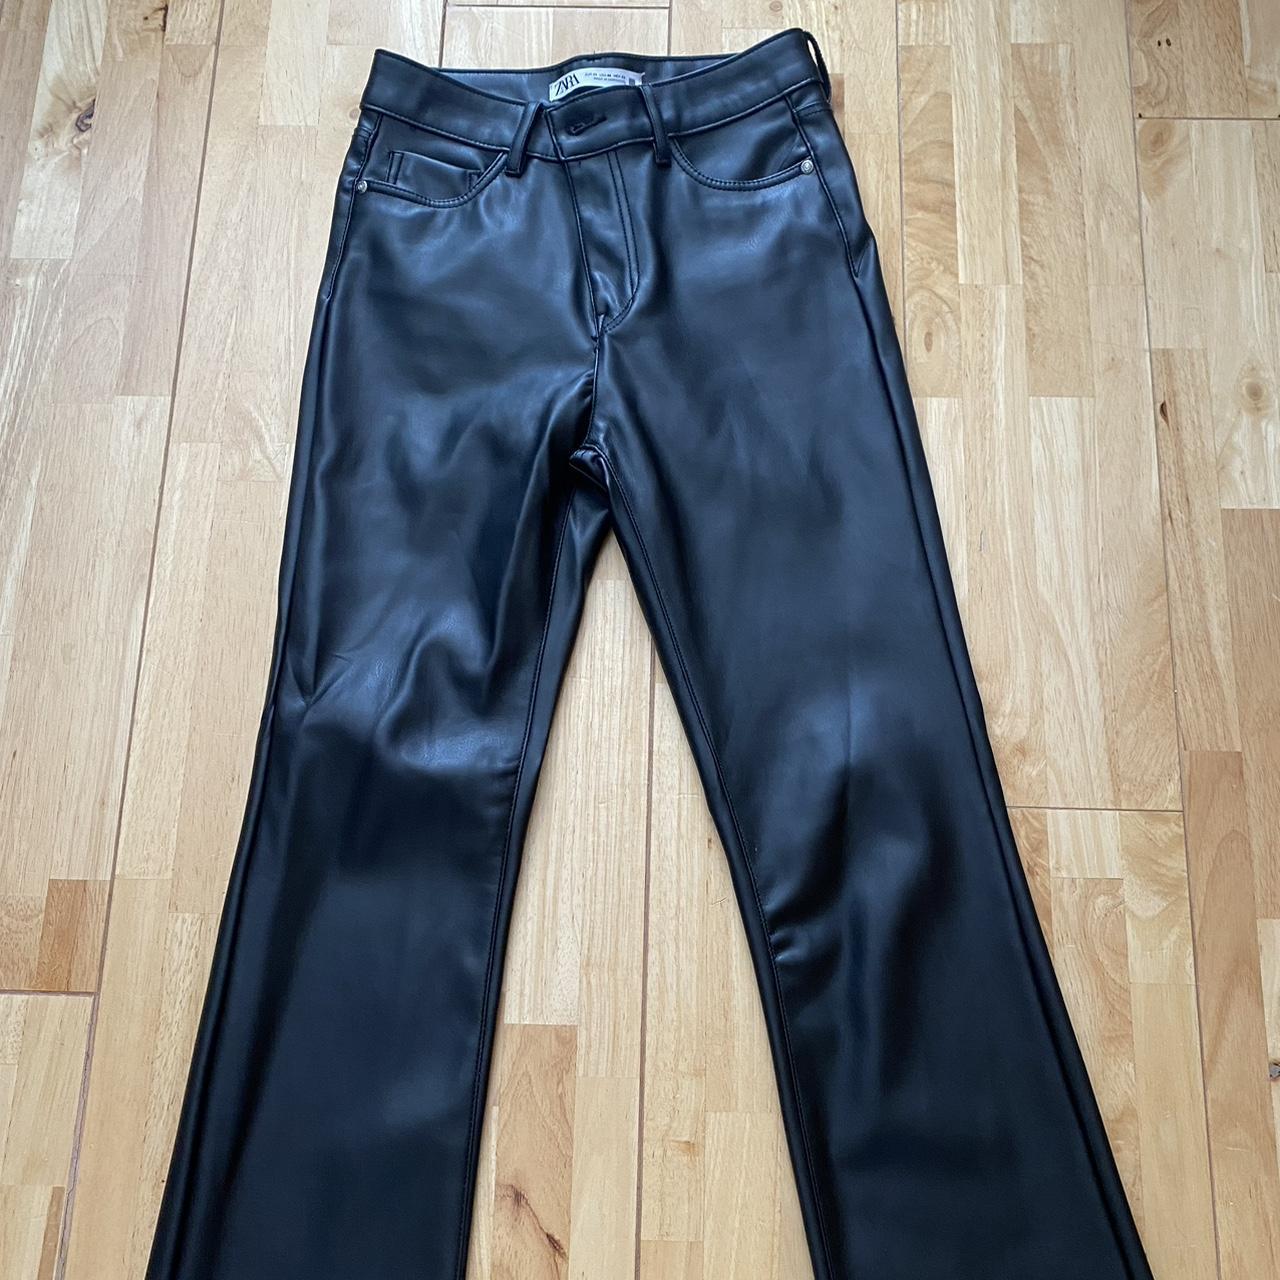 Zara Leather trousers - Zara faux leather mini... - Depop